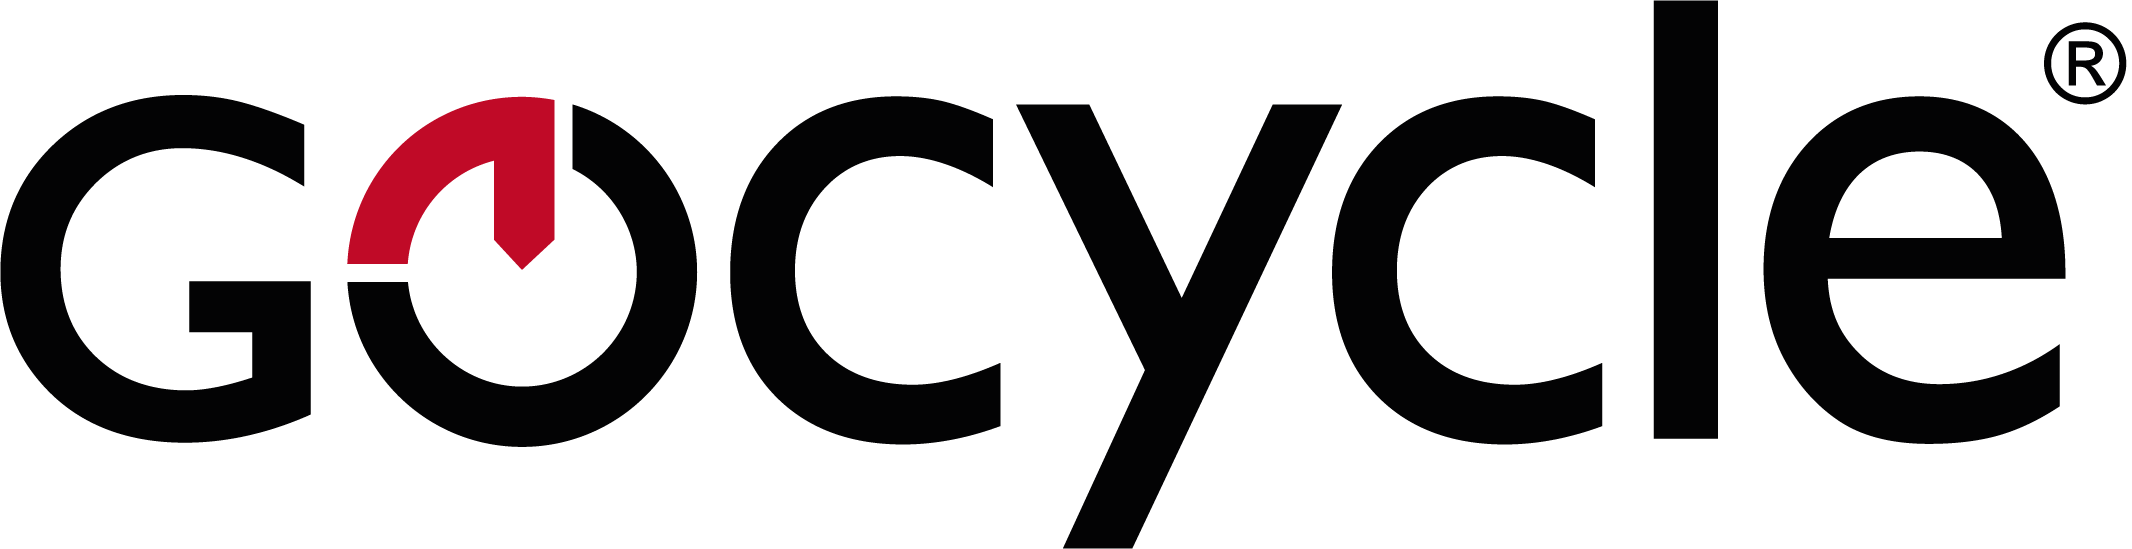 Go cycle logo